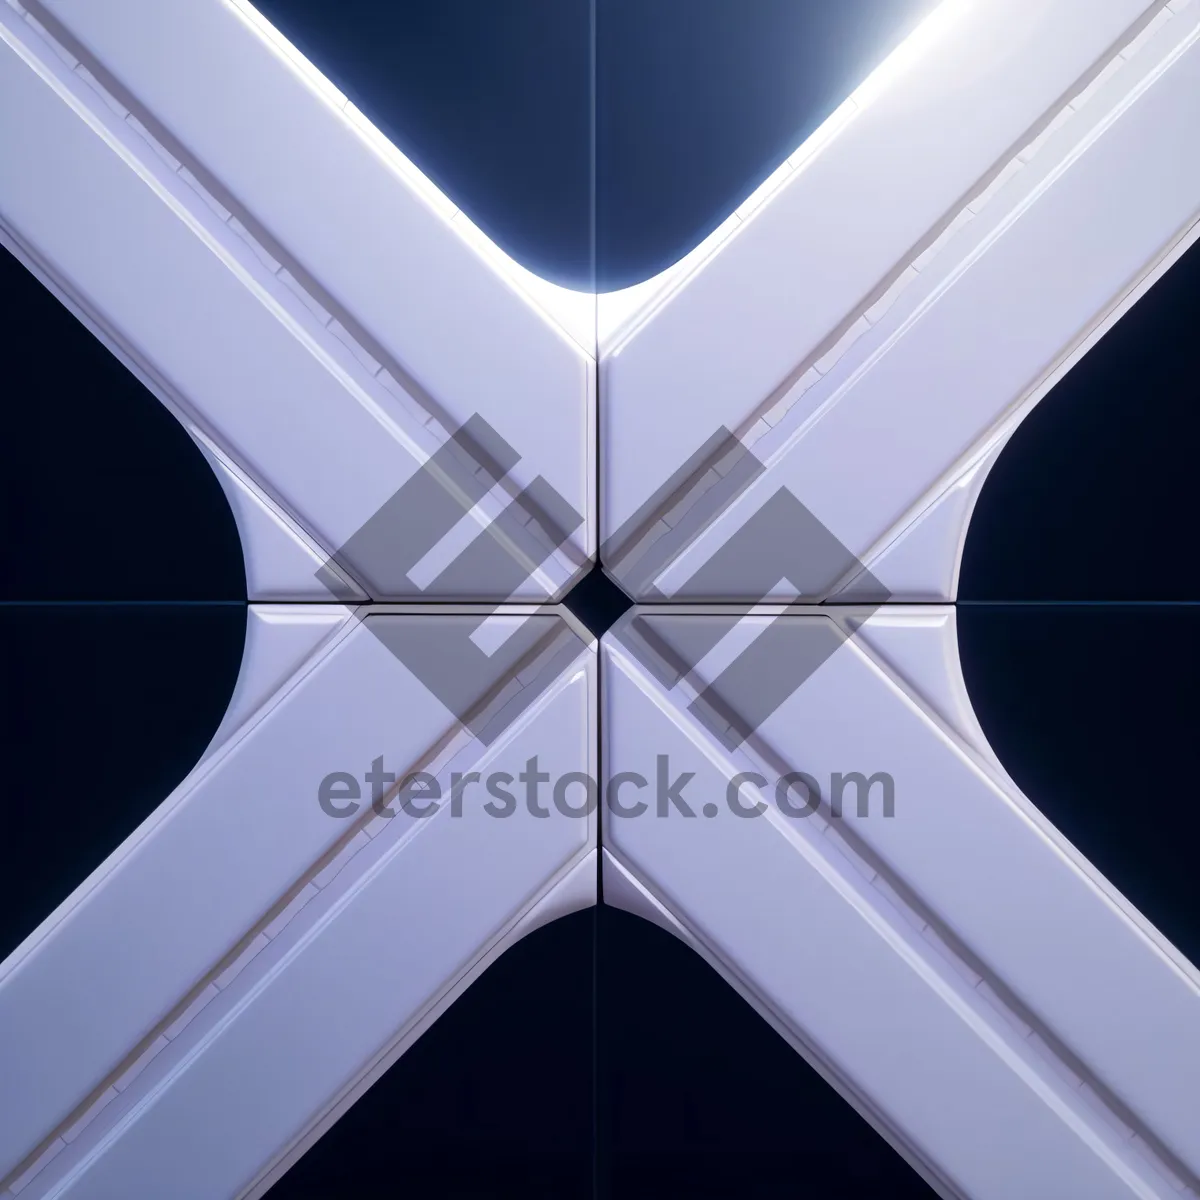 Picture of Symmetrical Gem Design - Artistic Digital Motion